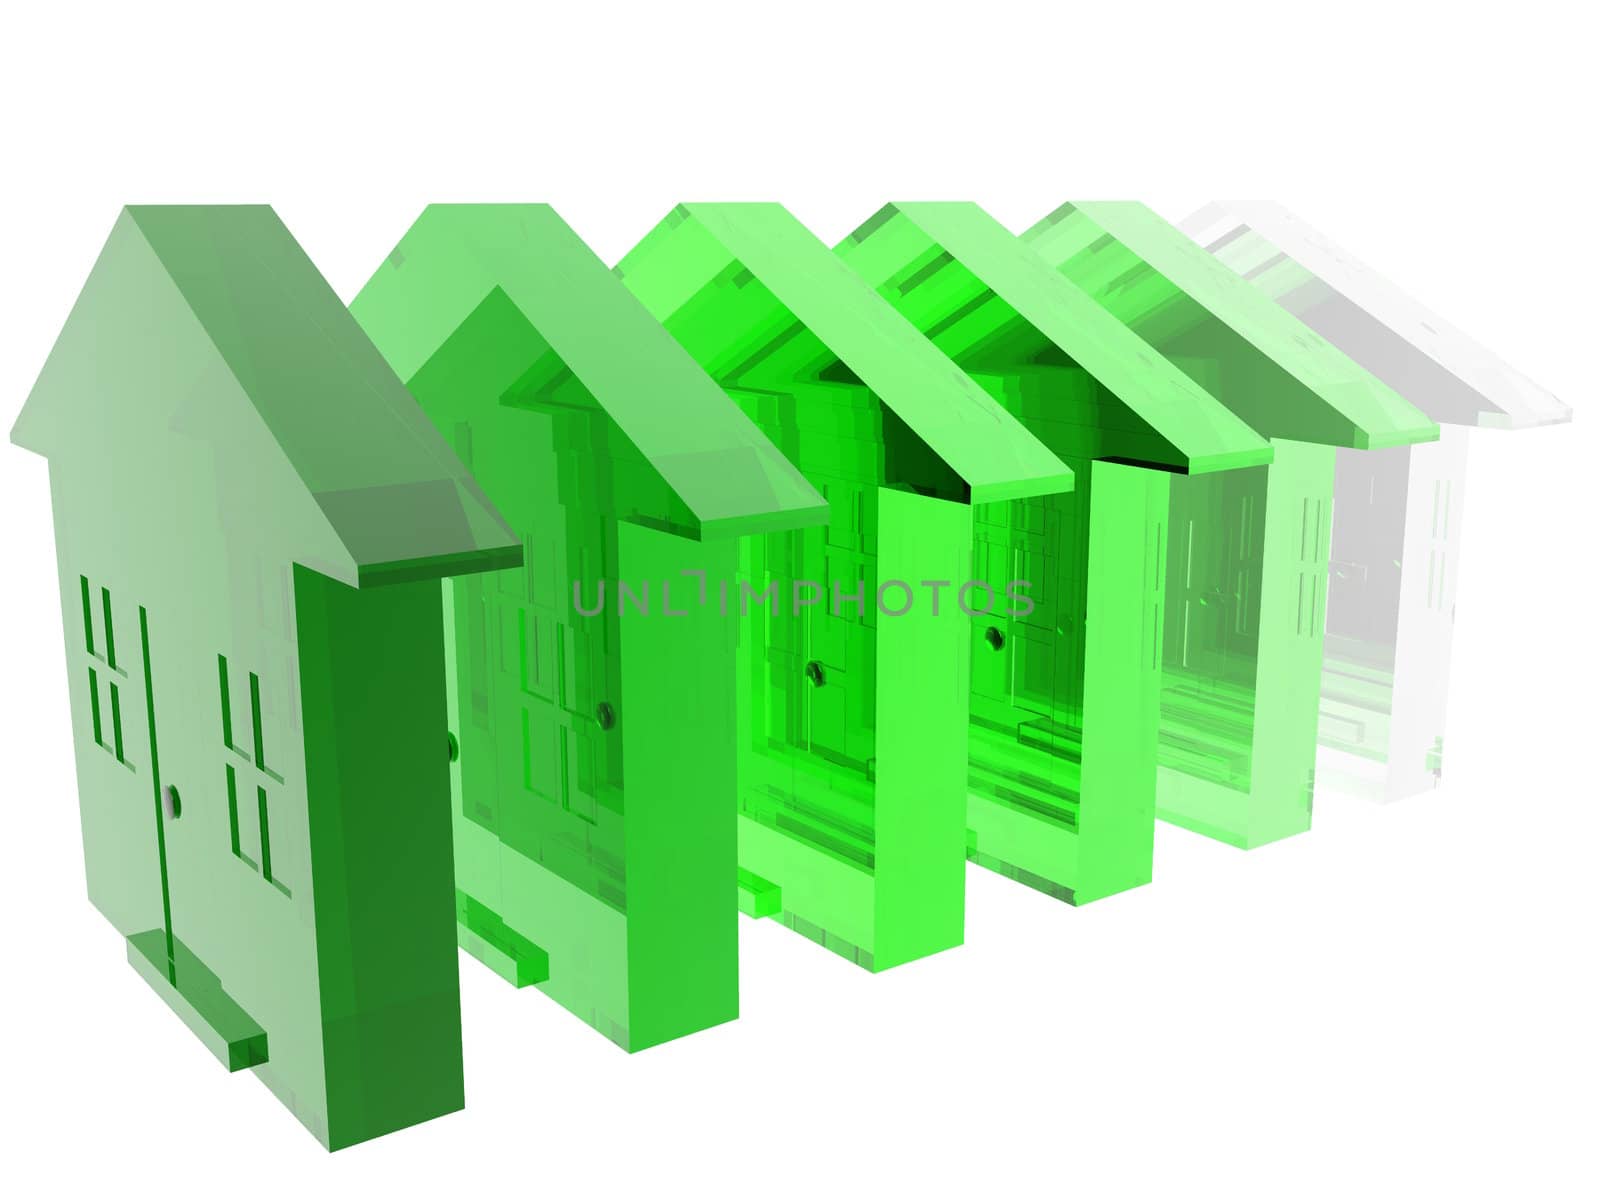 A conceptual image of environmental friendly housing.